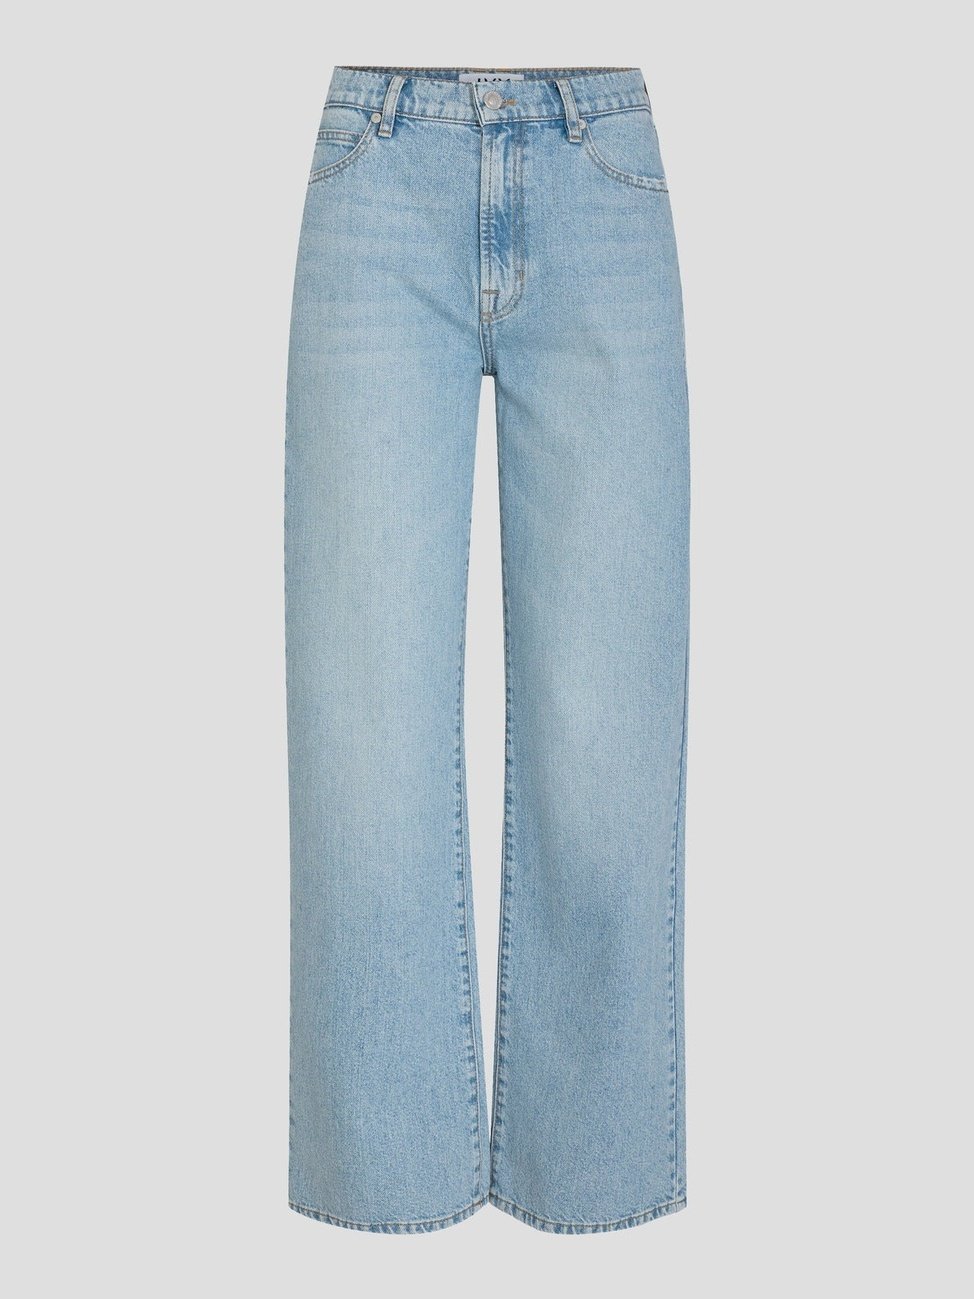  BukserIVY Copenhagen Mia Straight Jeans Wash - Puerto Banus